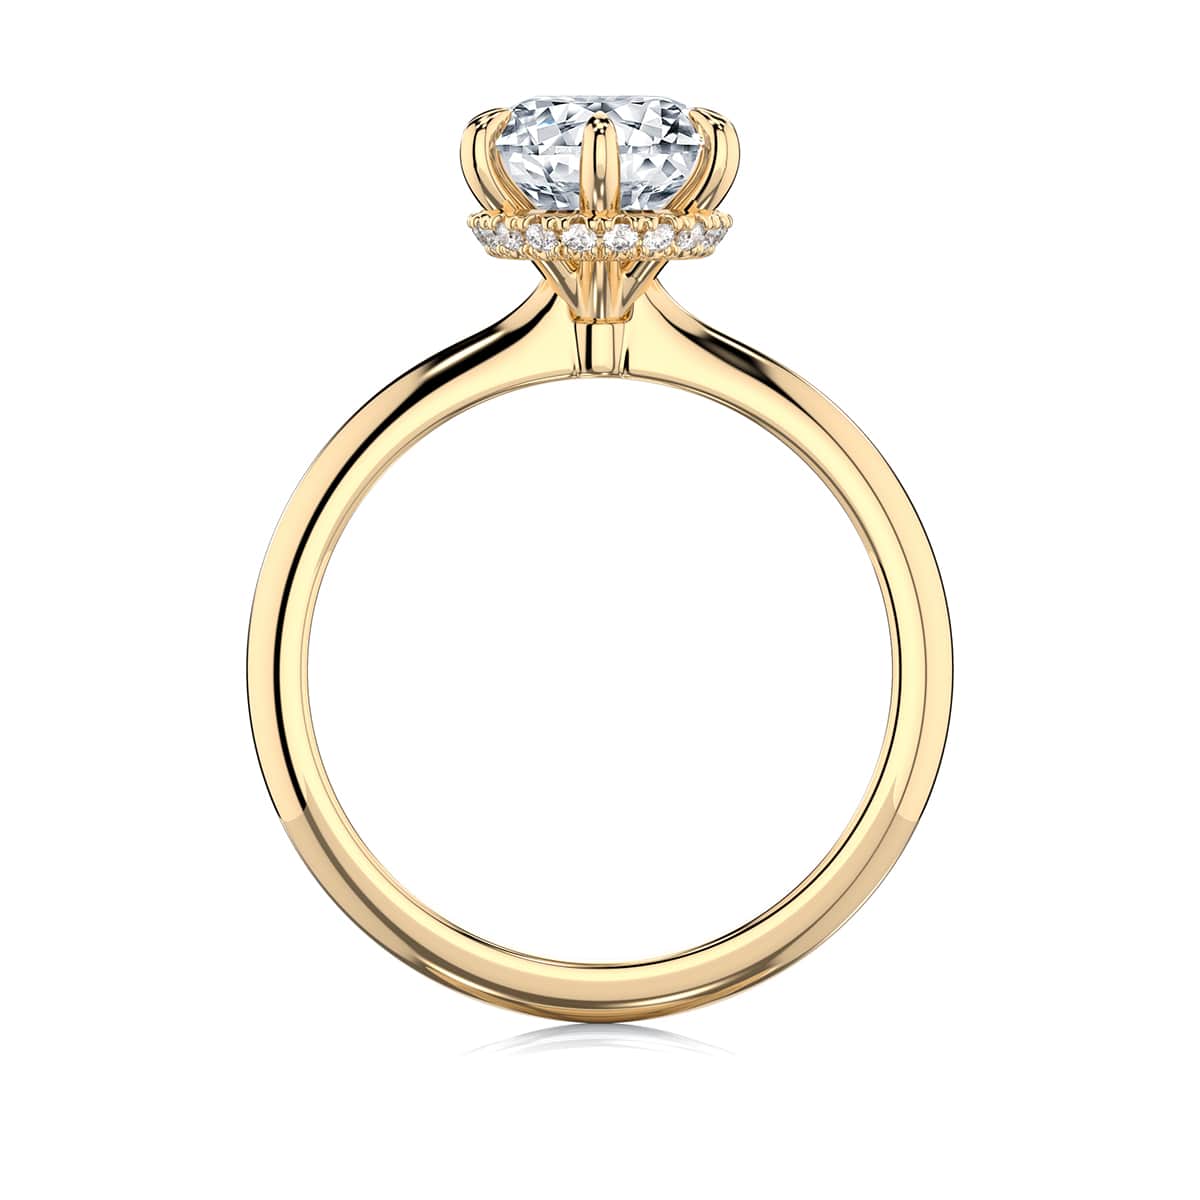 Rebarto Round Diamond Solitaire Engagement Ring in Yellow Gold